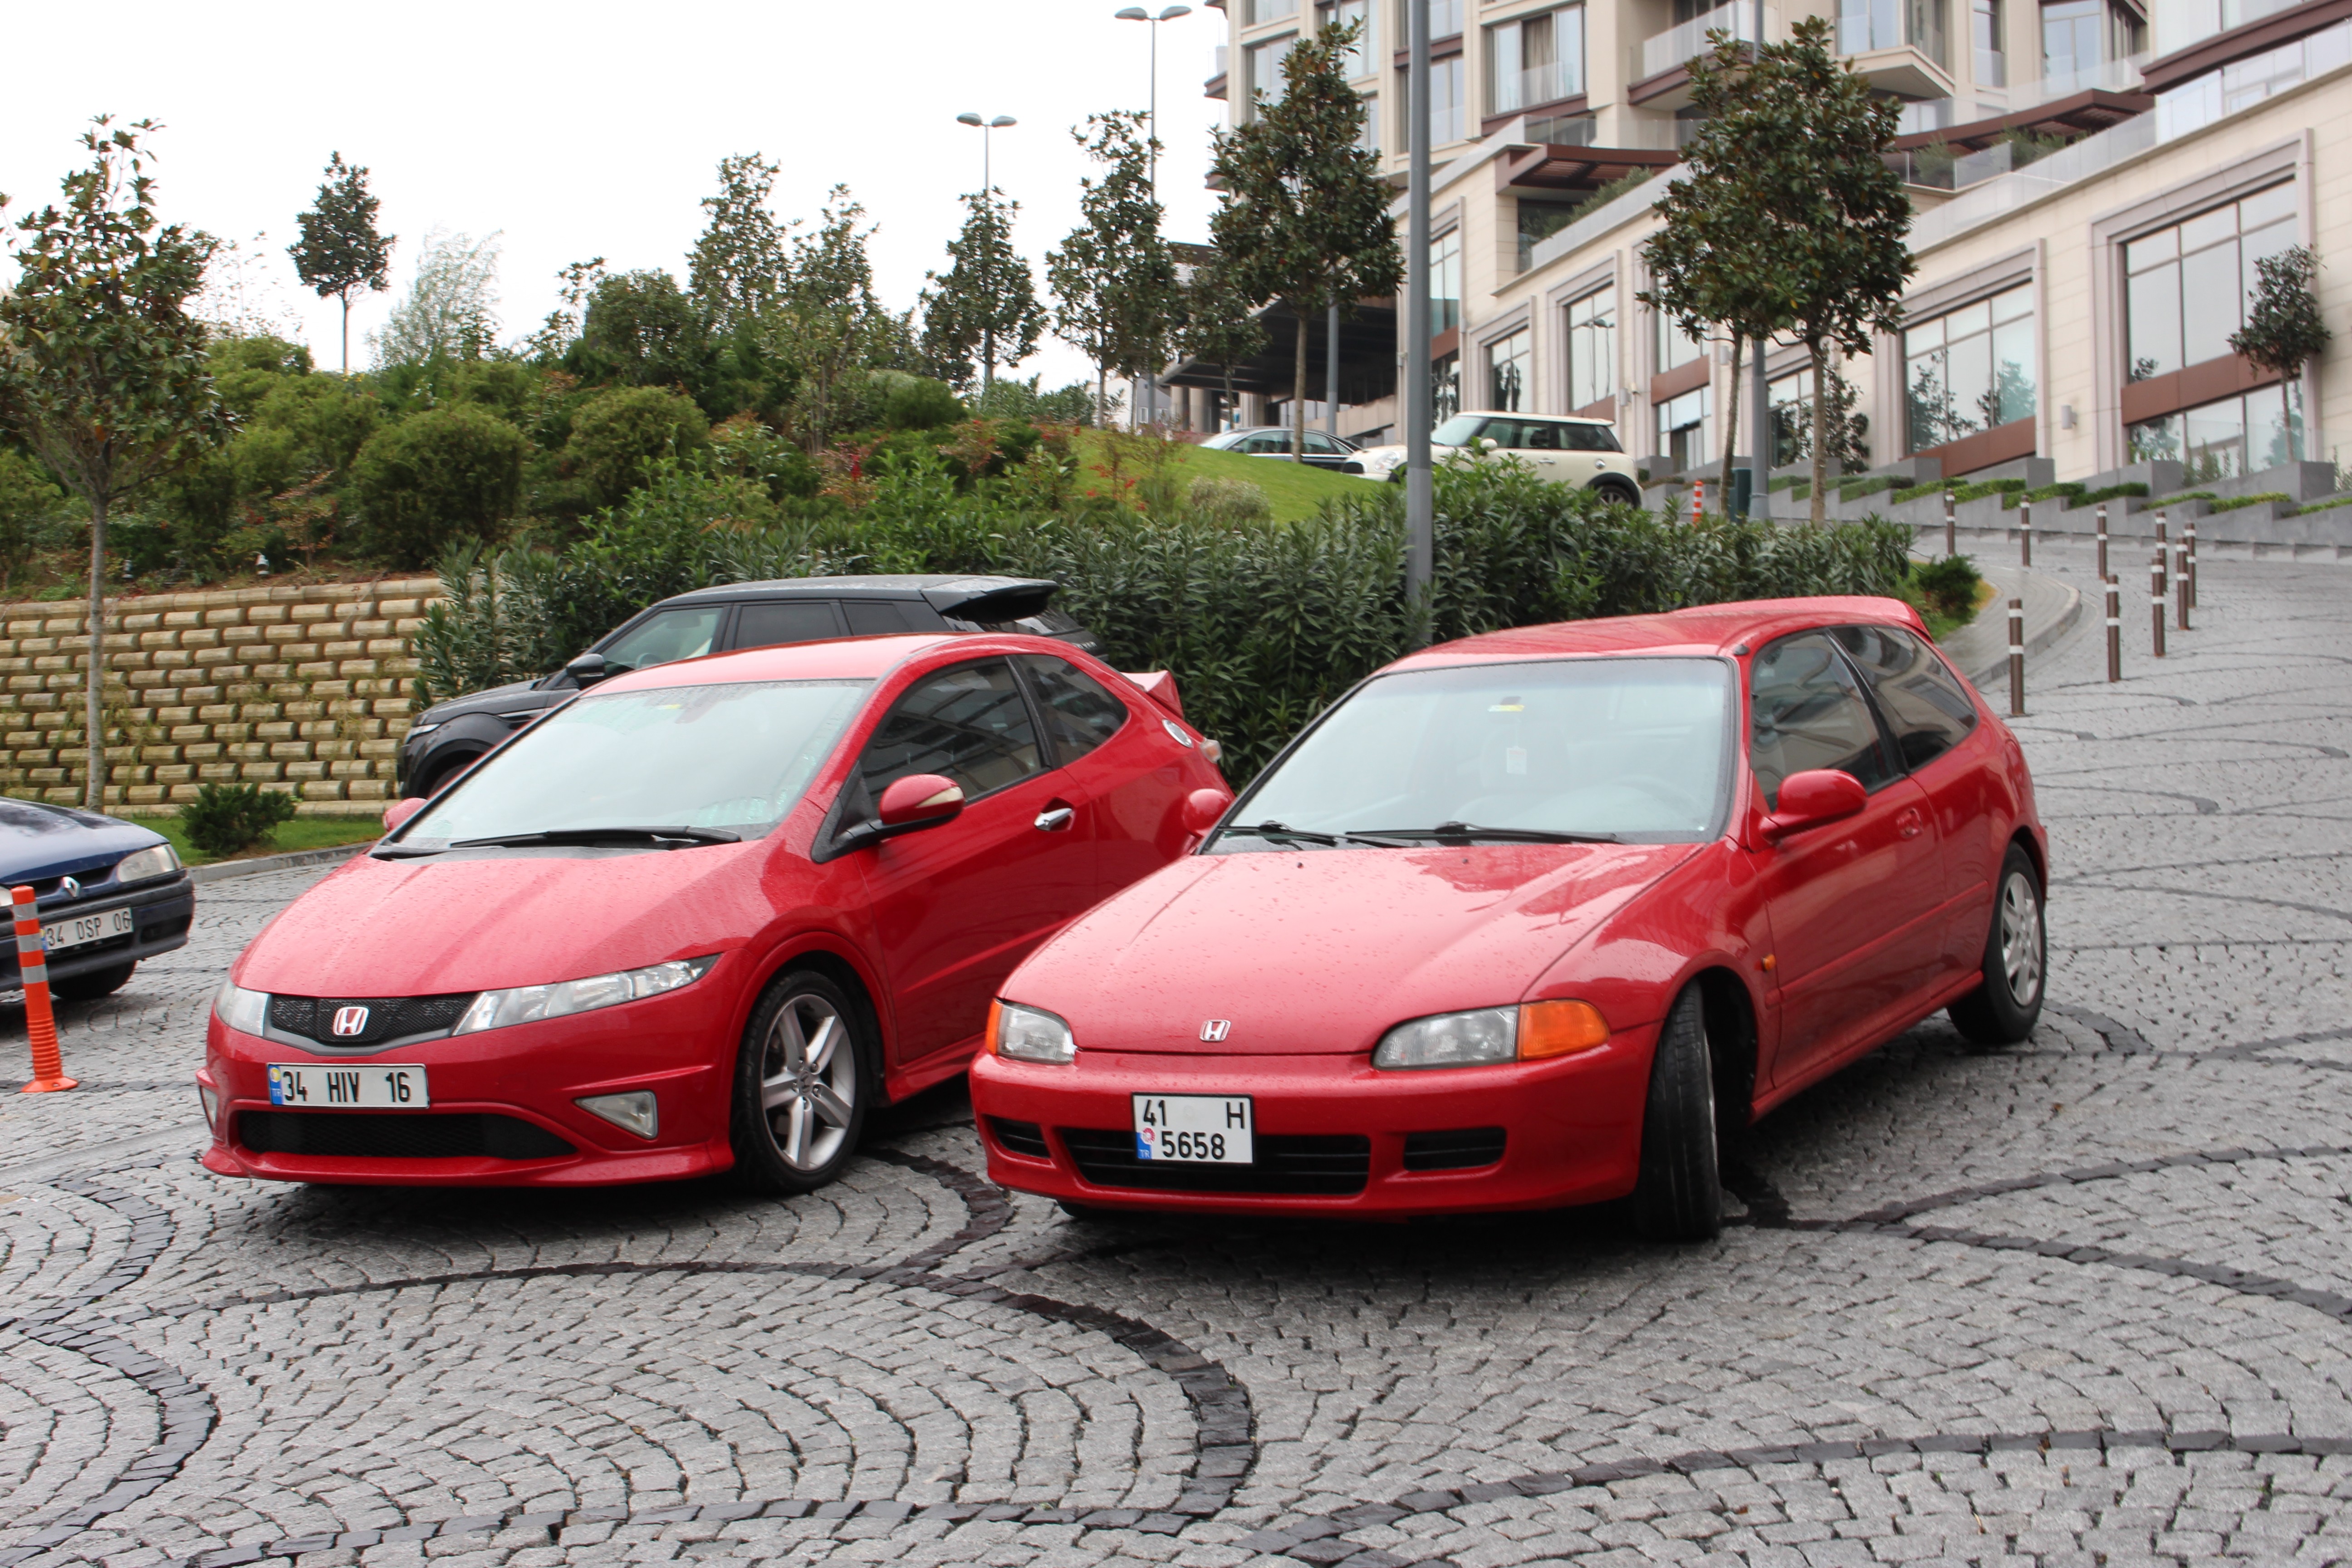 Honda, Honda Civic, Sports Car, Type R, Type S, Red Cars, Turkey Wallpaper